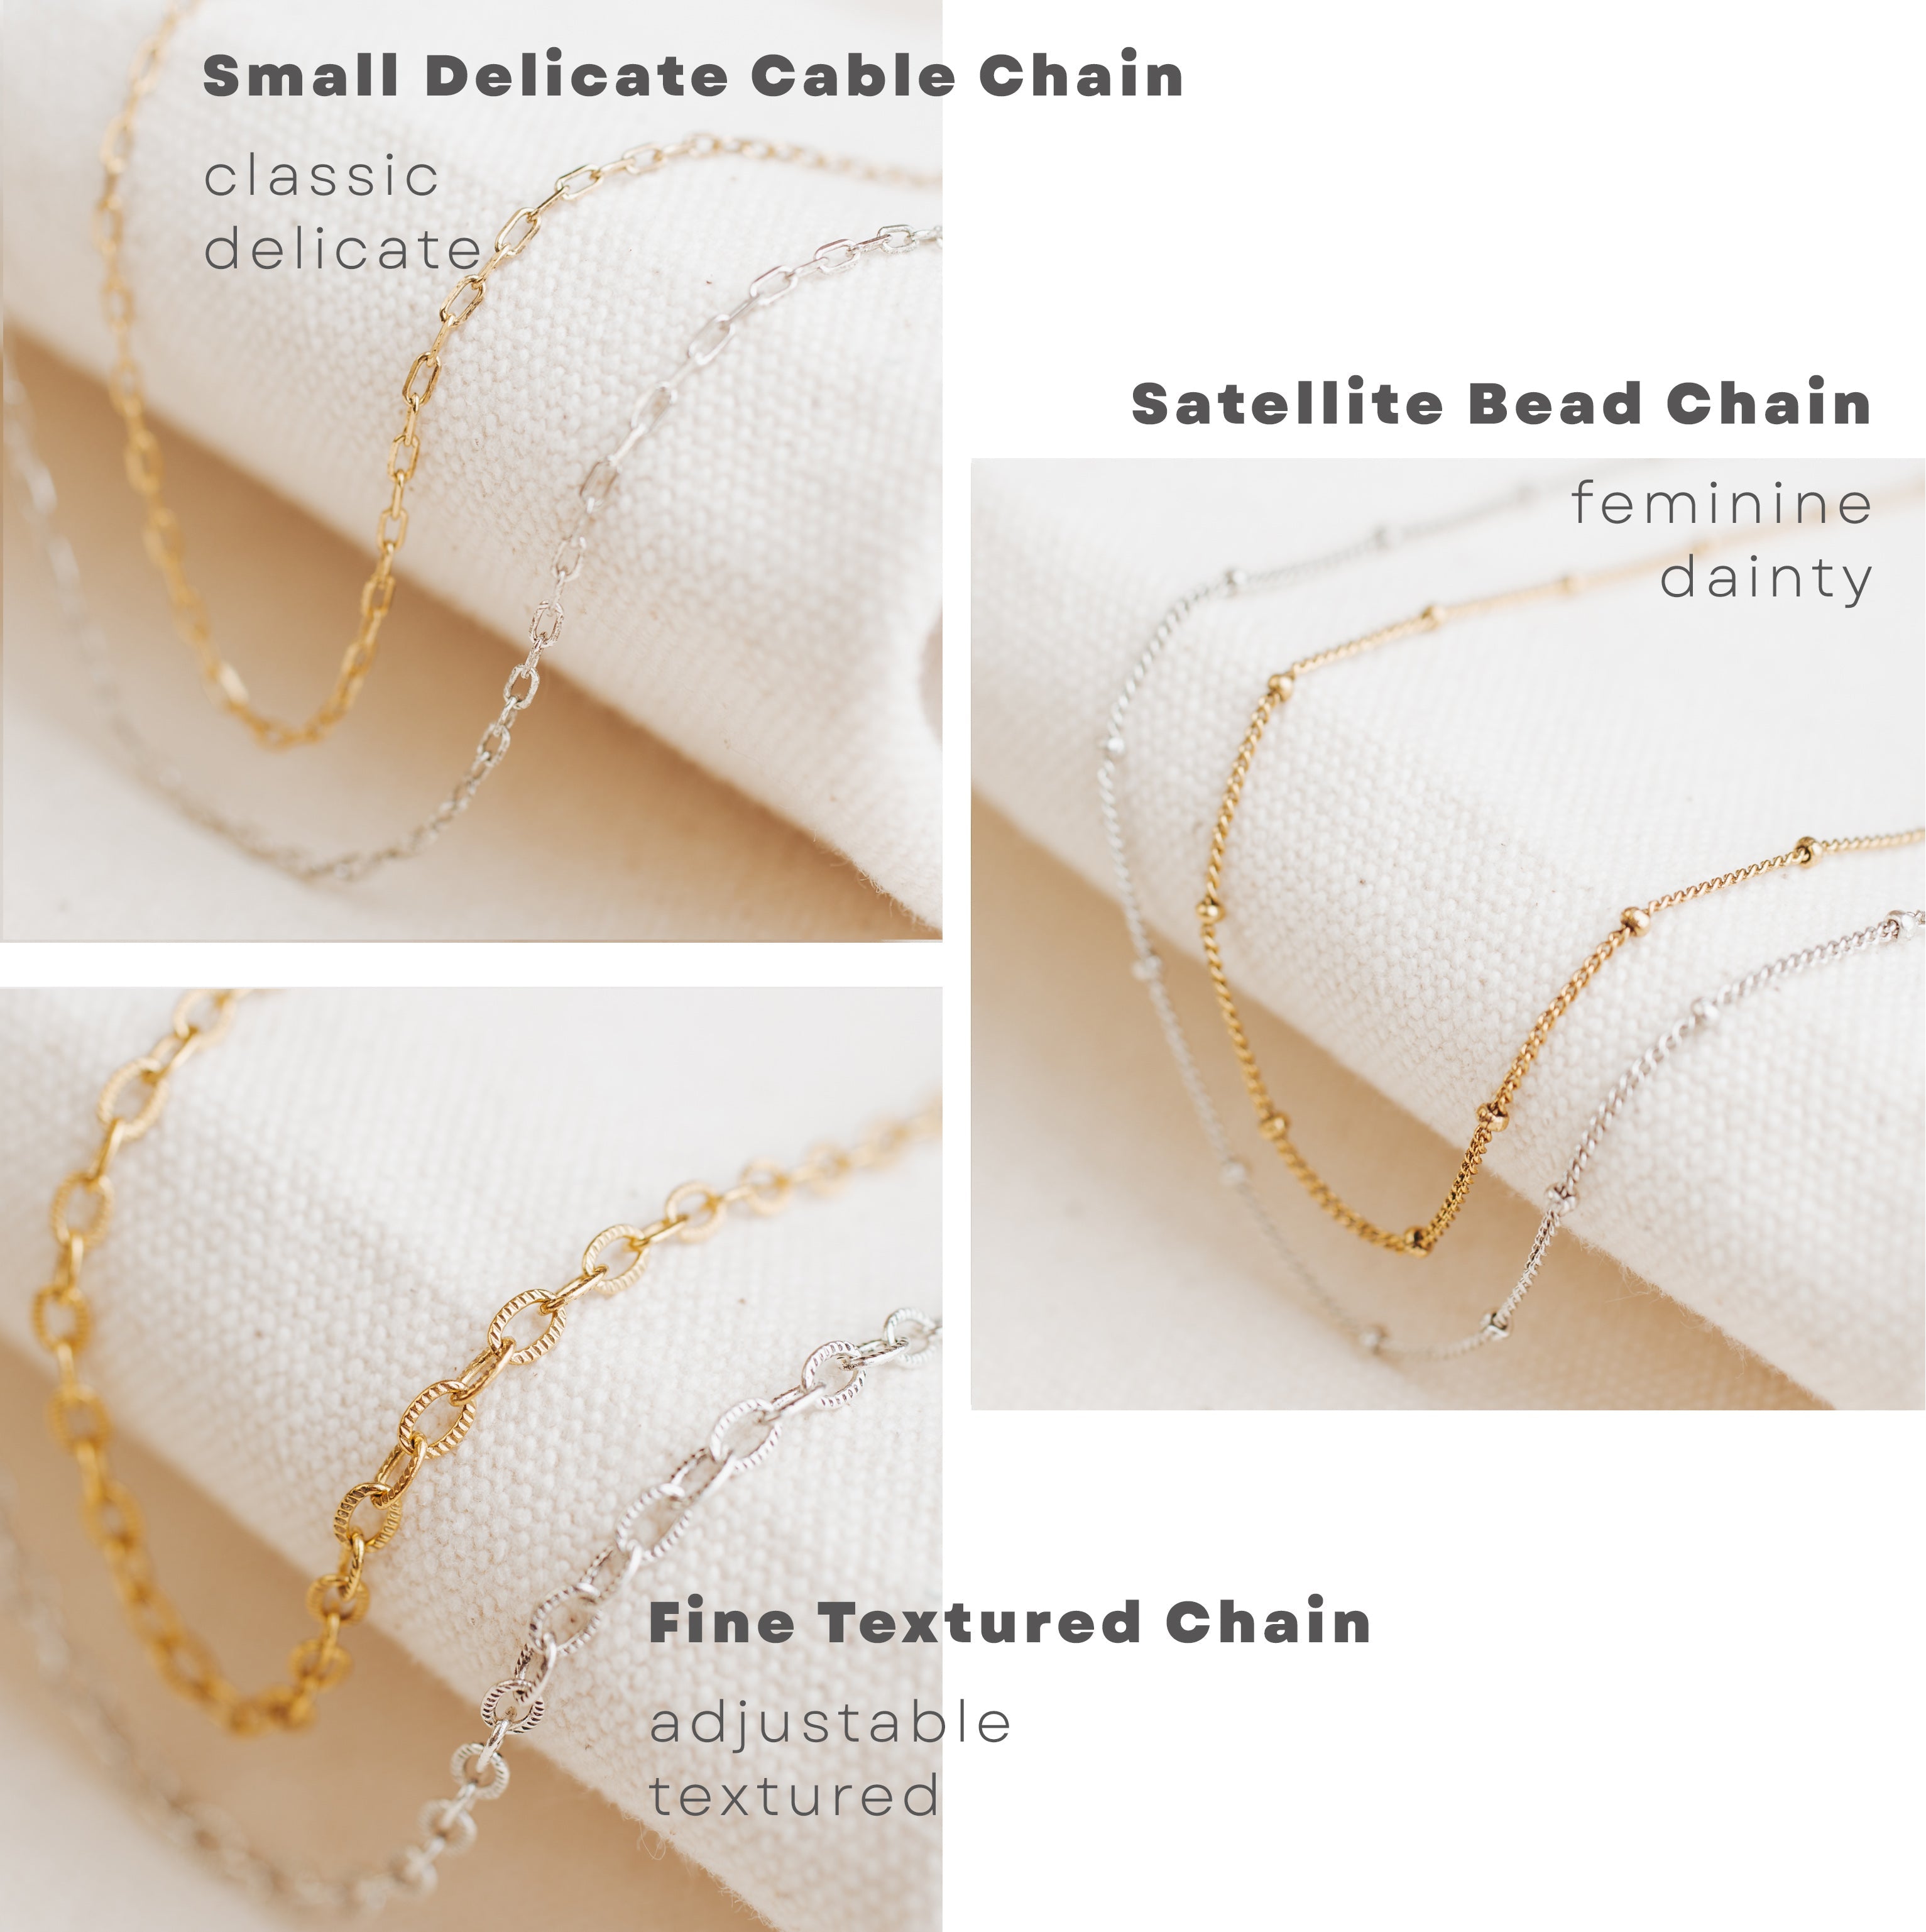 Satellite Bead Chain – Bel Kai